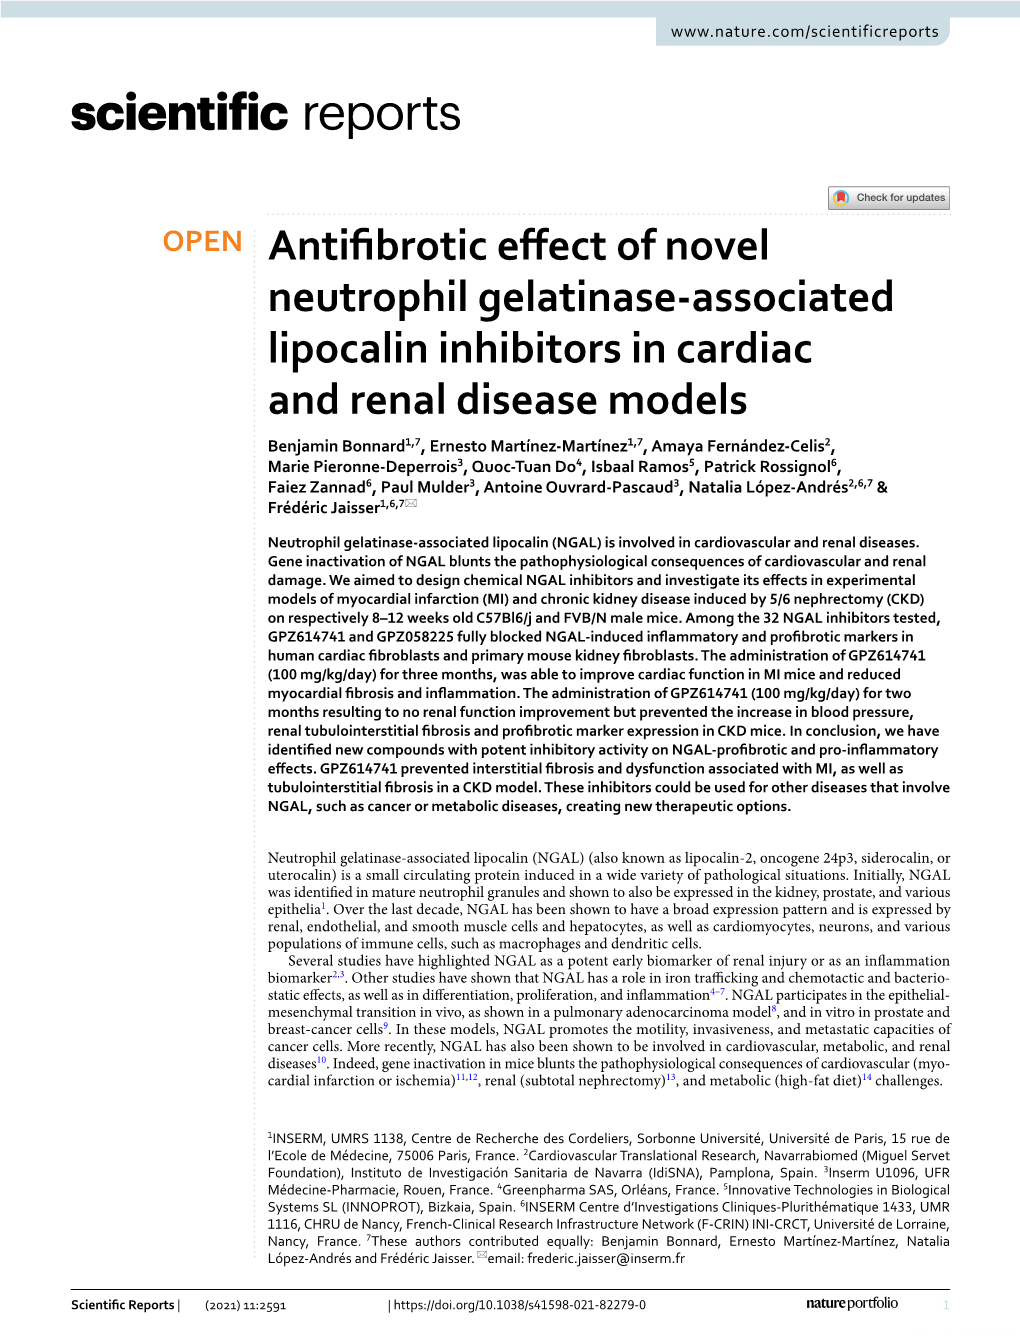 Antifibrotic Effect of Novel Neutrophil Gelatinase-Associated Lipocalin